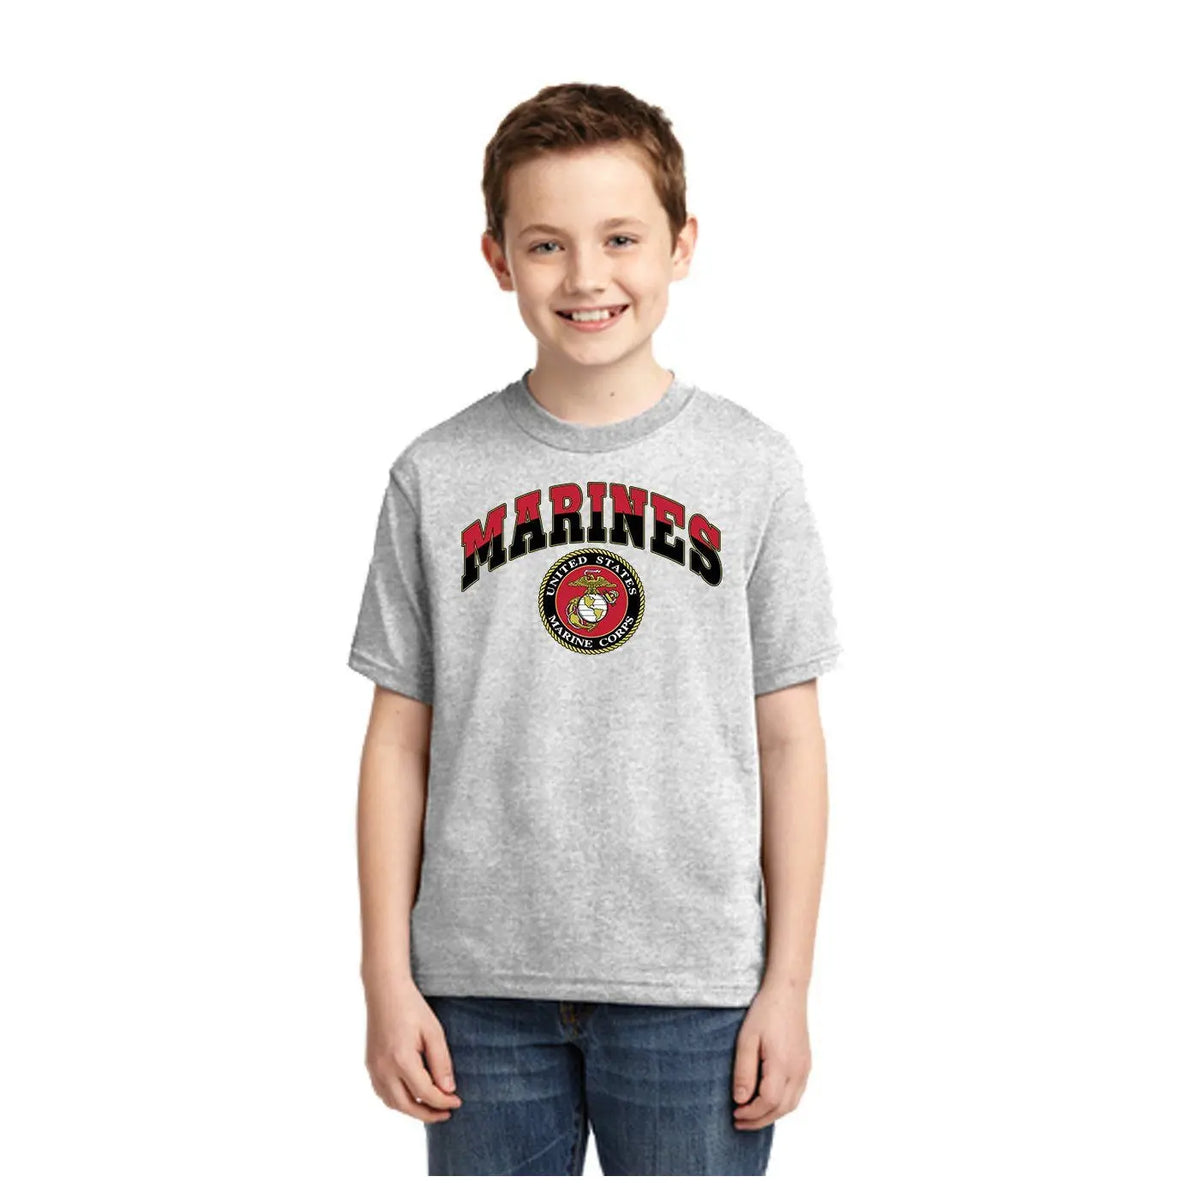 Classic Marine Corps Youth T-Shirt - Marine Corps Direct